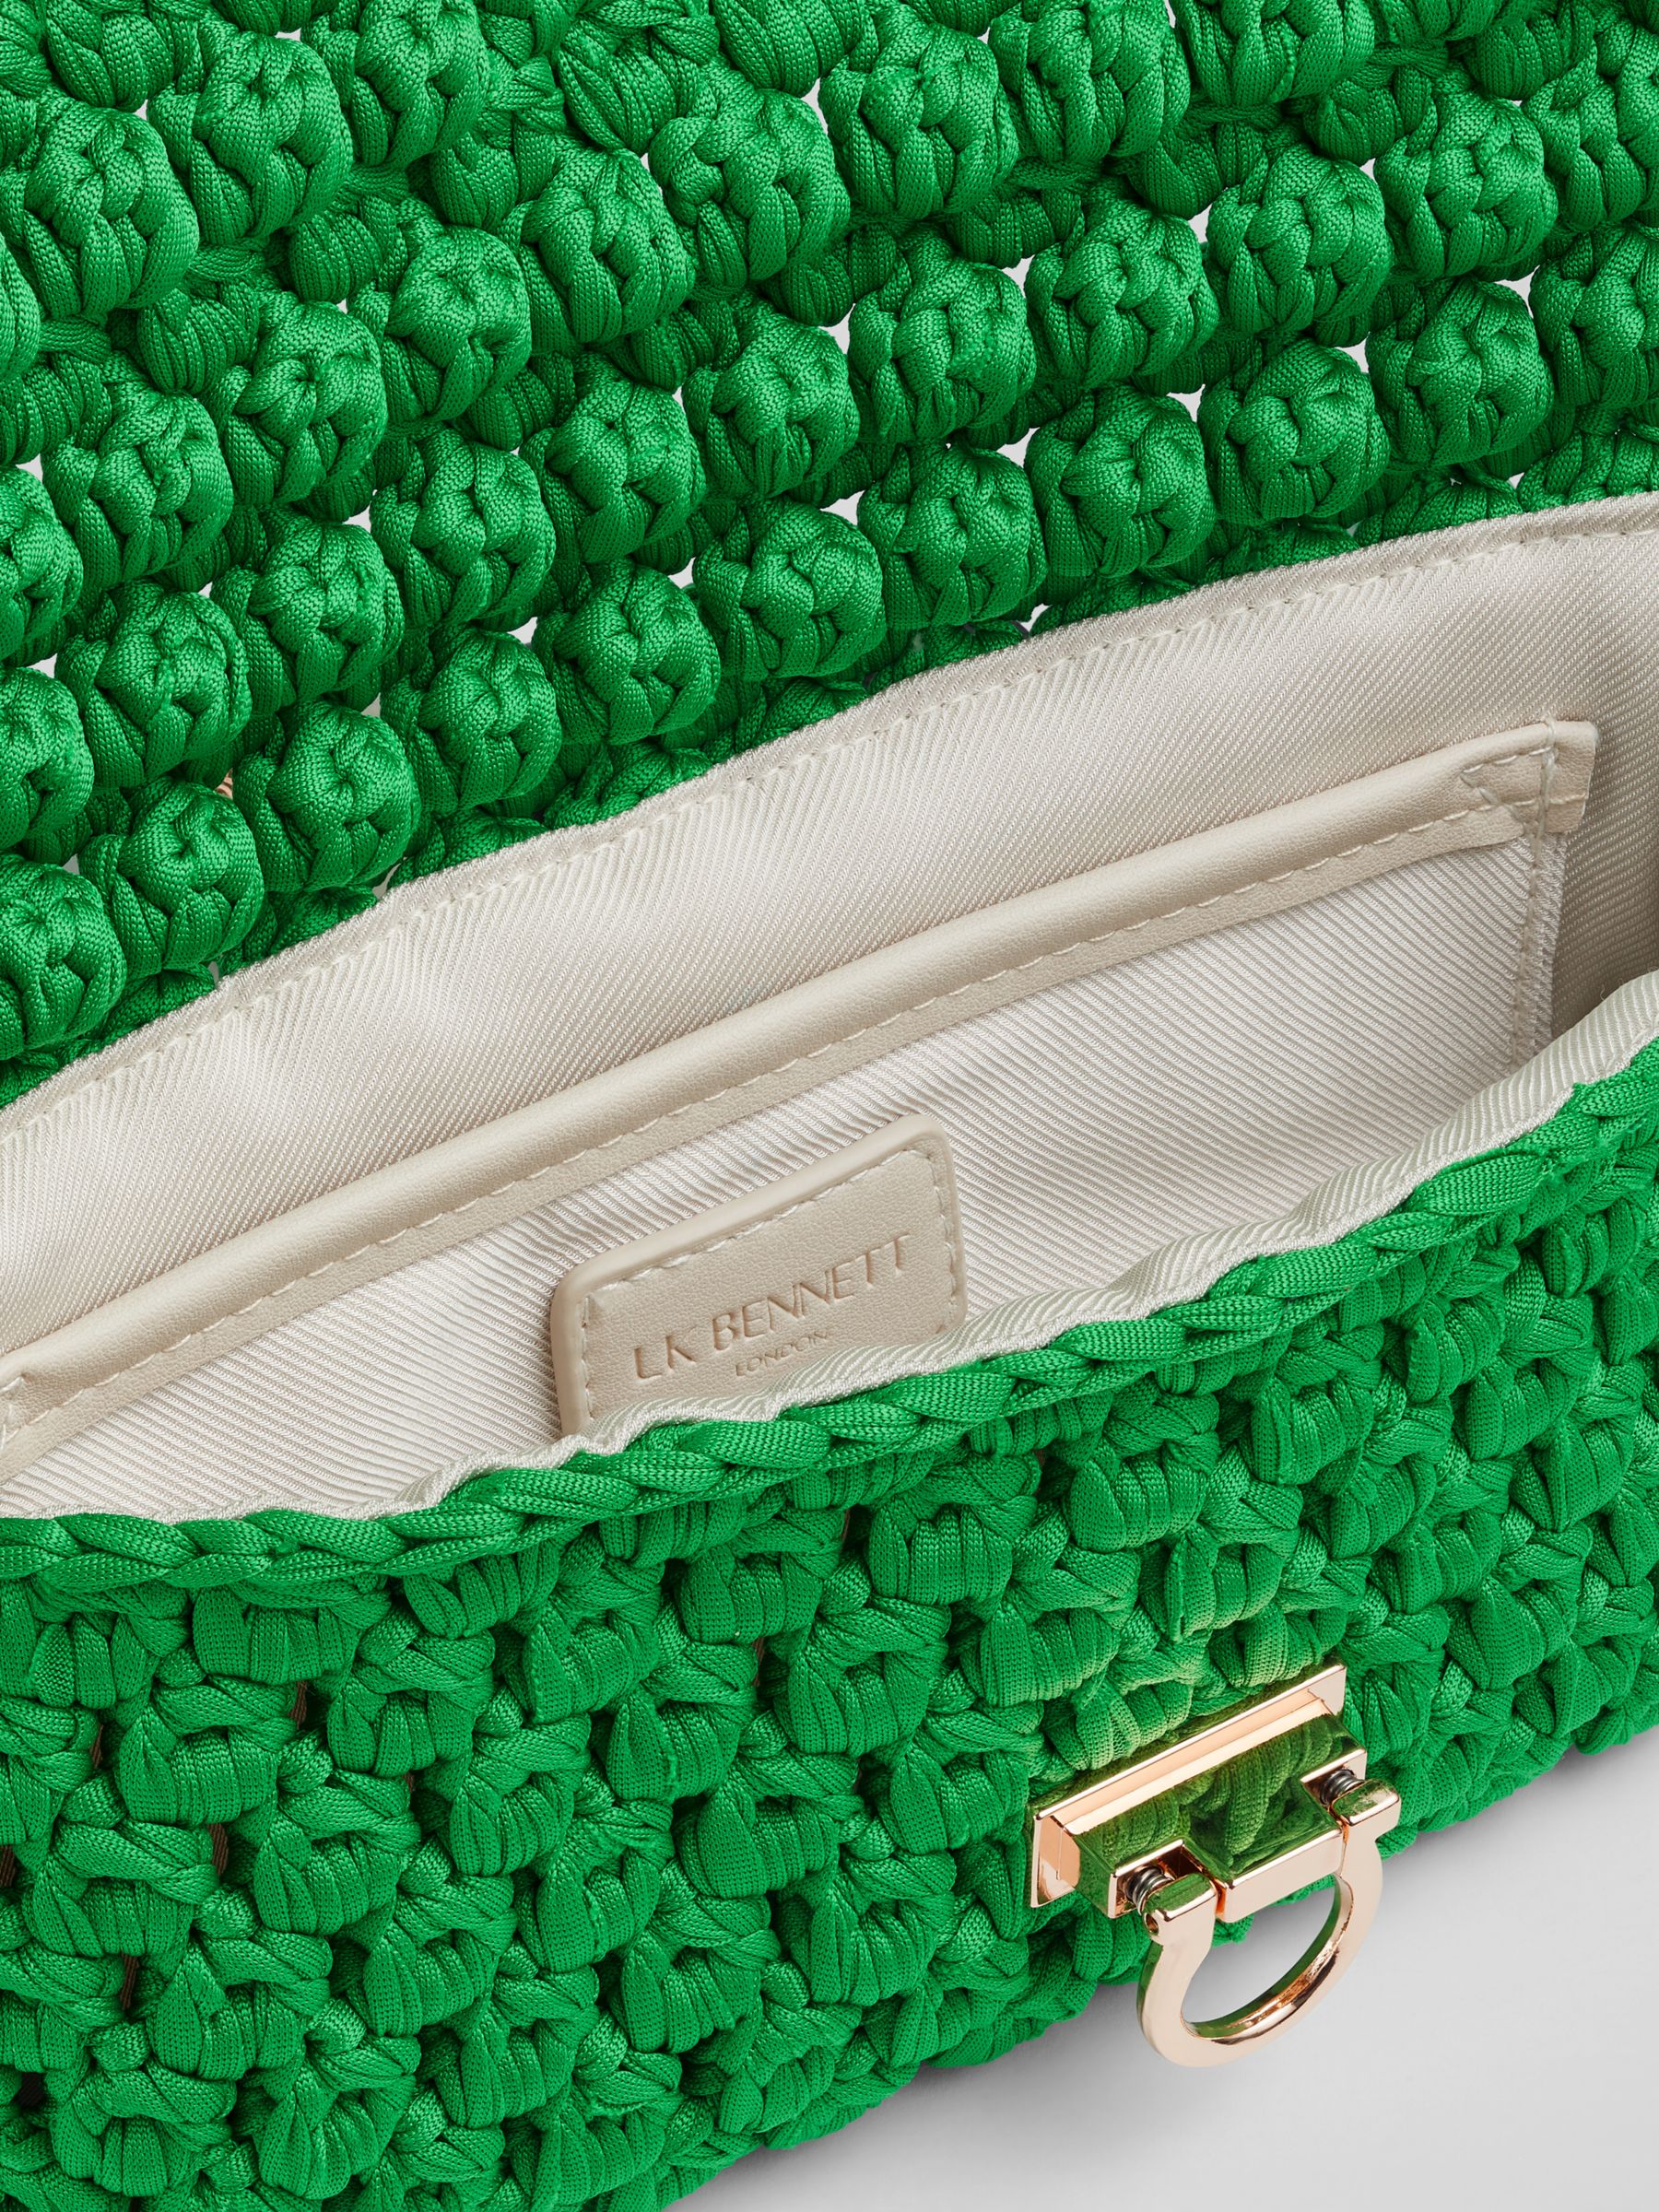 L.K.Bennett Essie Chunky Woven Envelope Clutch Bag, Green, One Size